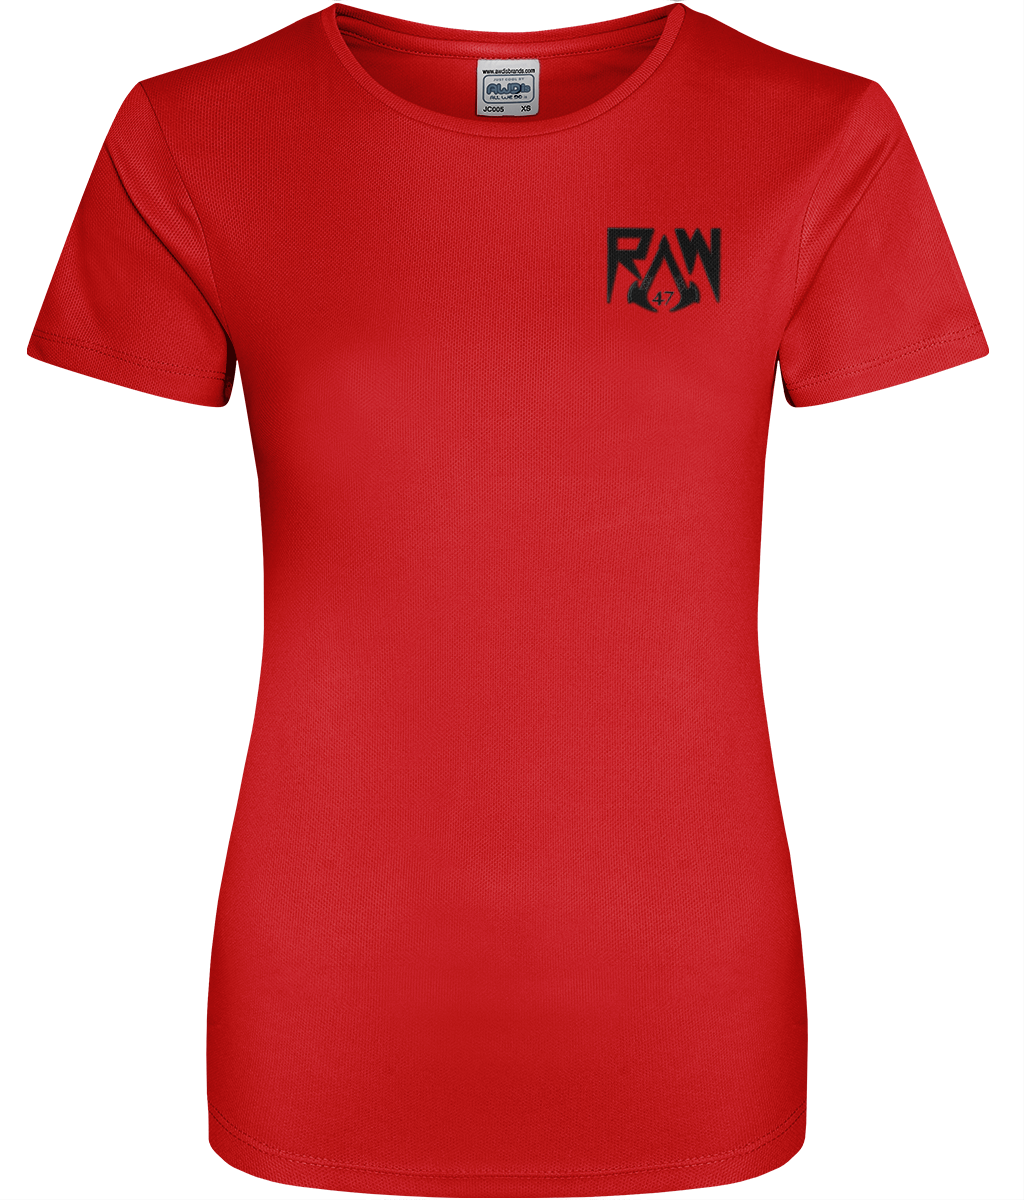 Raw47 Women's Cool Sports T-shirt